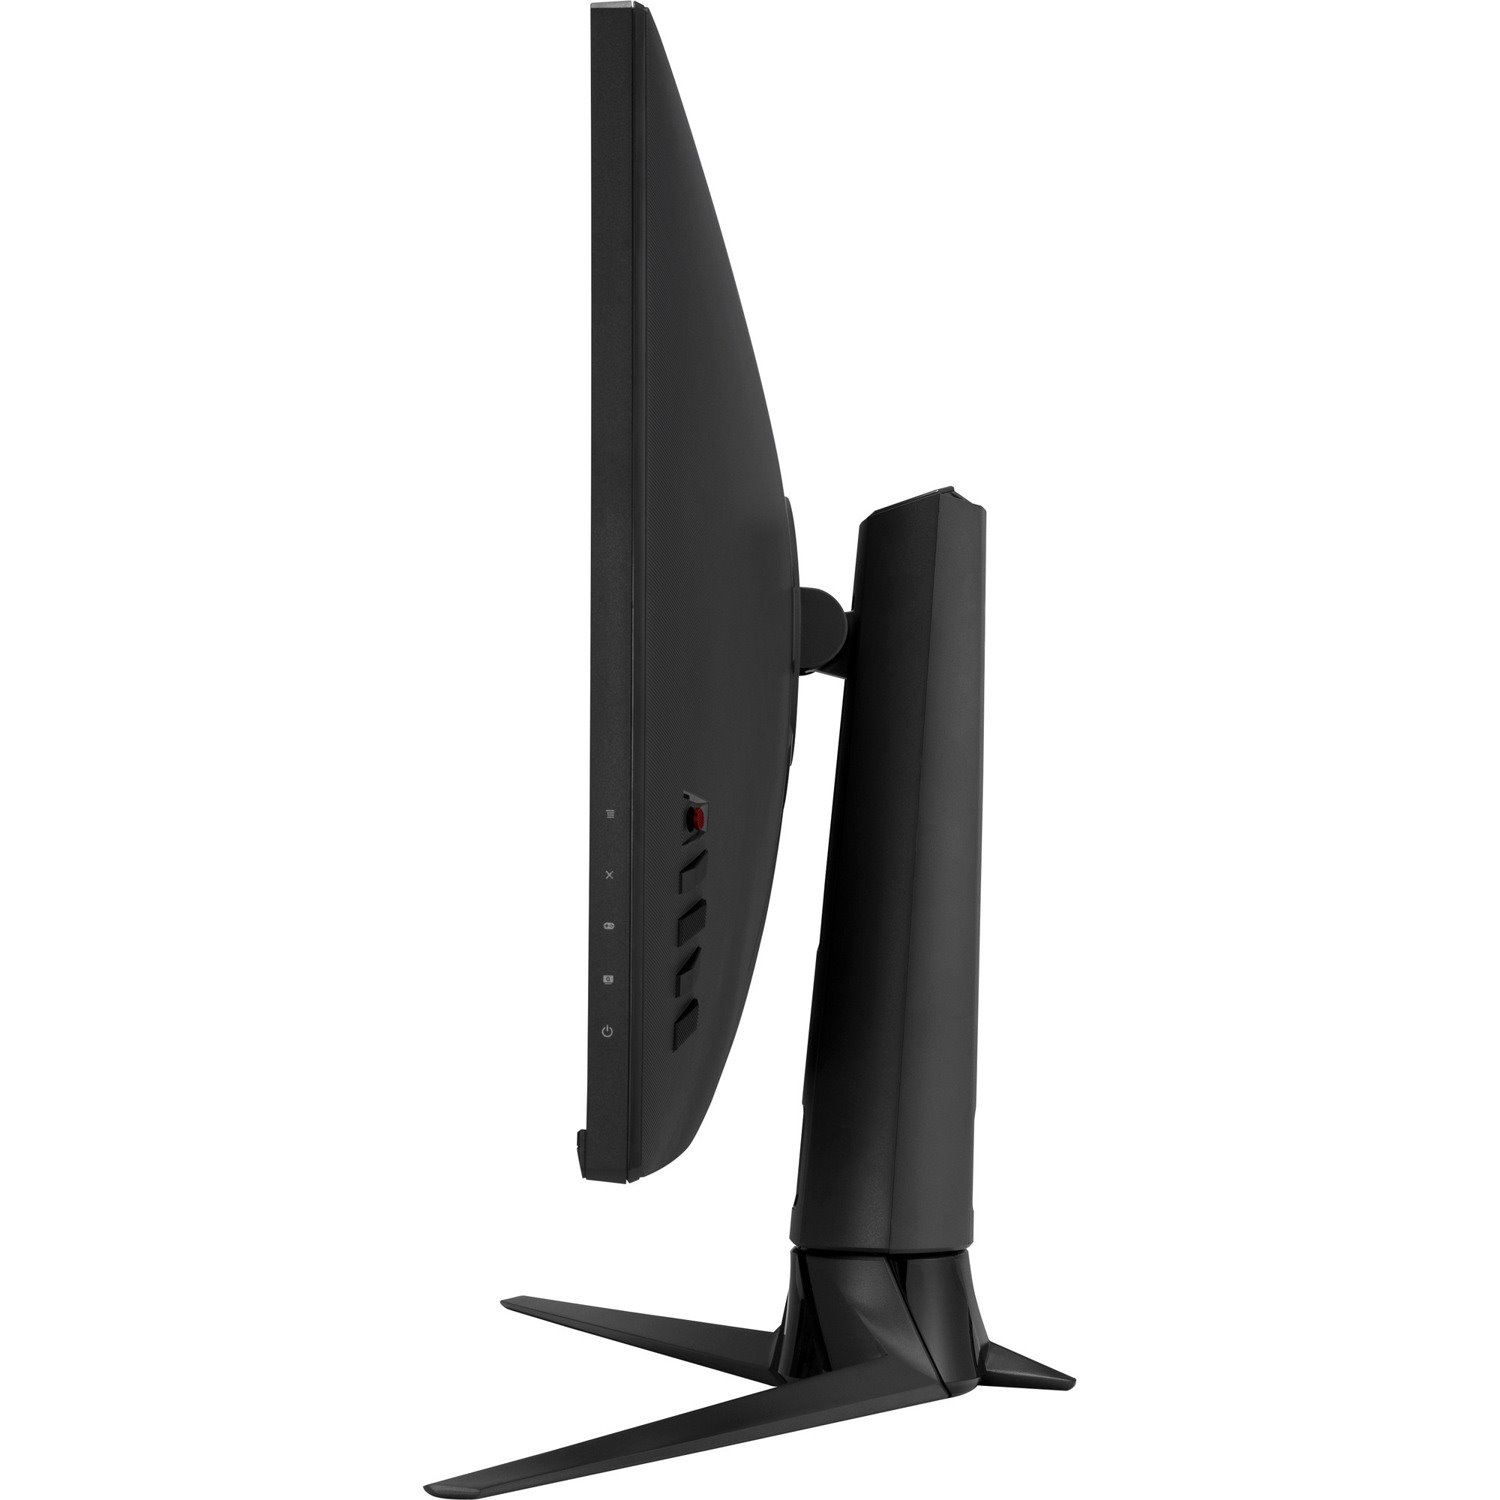 Asus ROG Swift PG329Q 32" WQHD LED Gaming LCD Monitor - 16:9 - Black